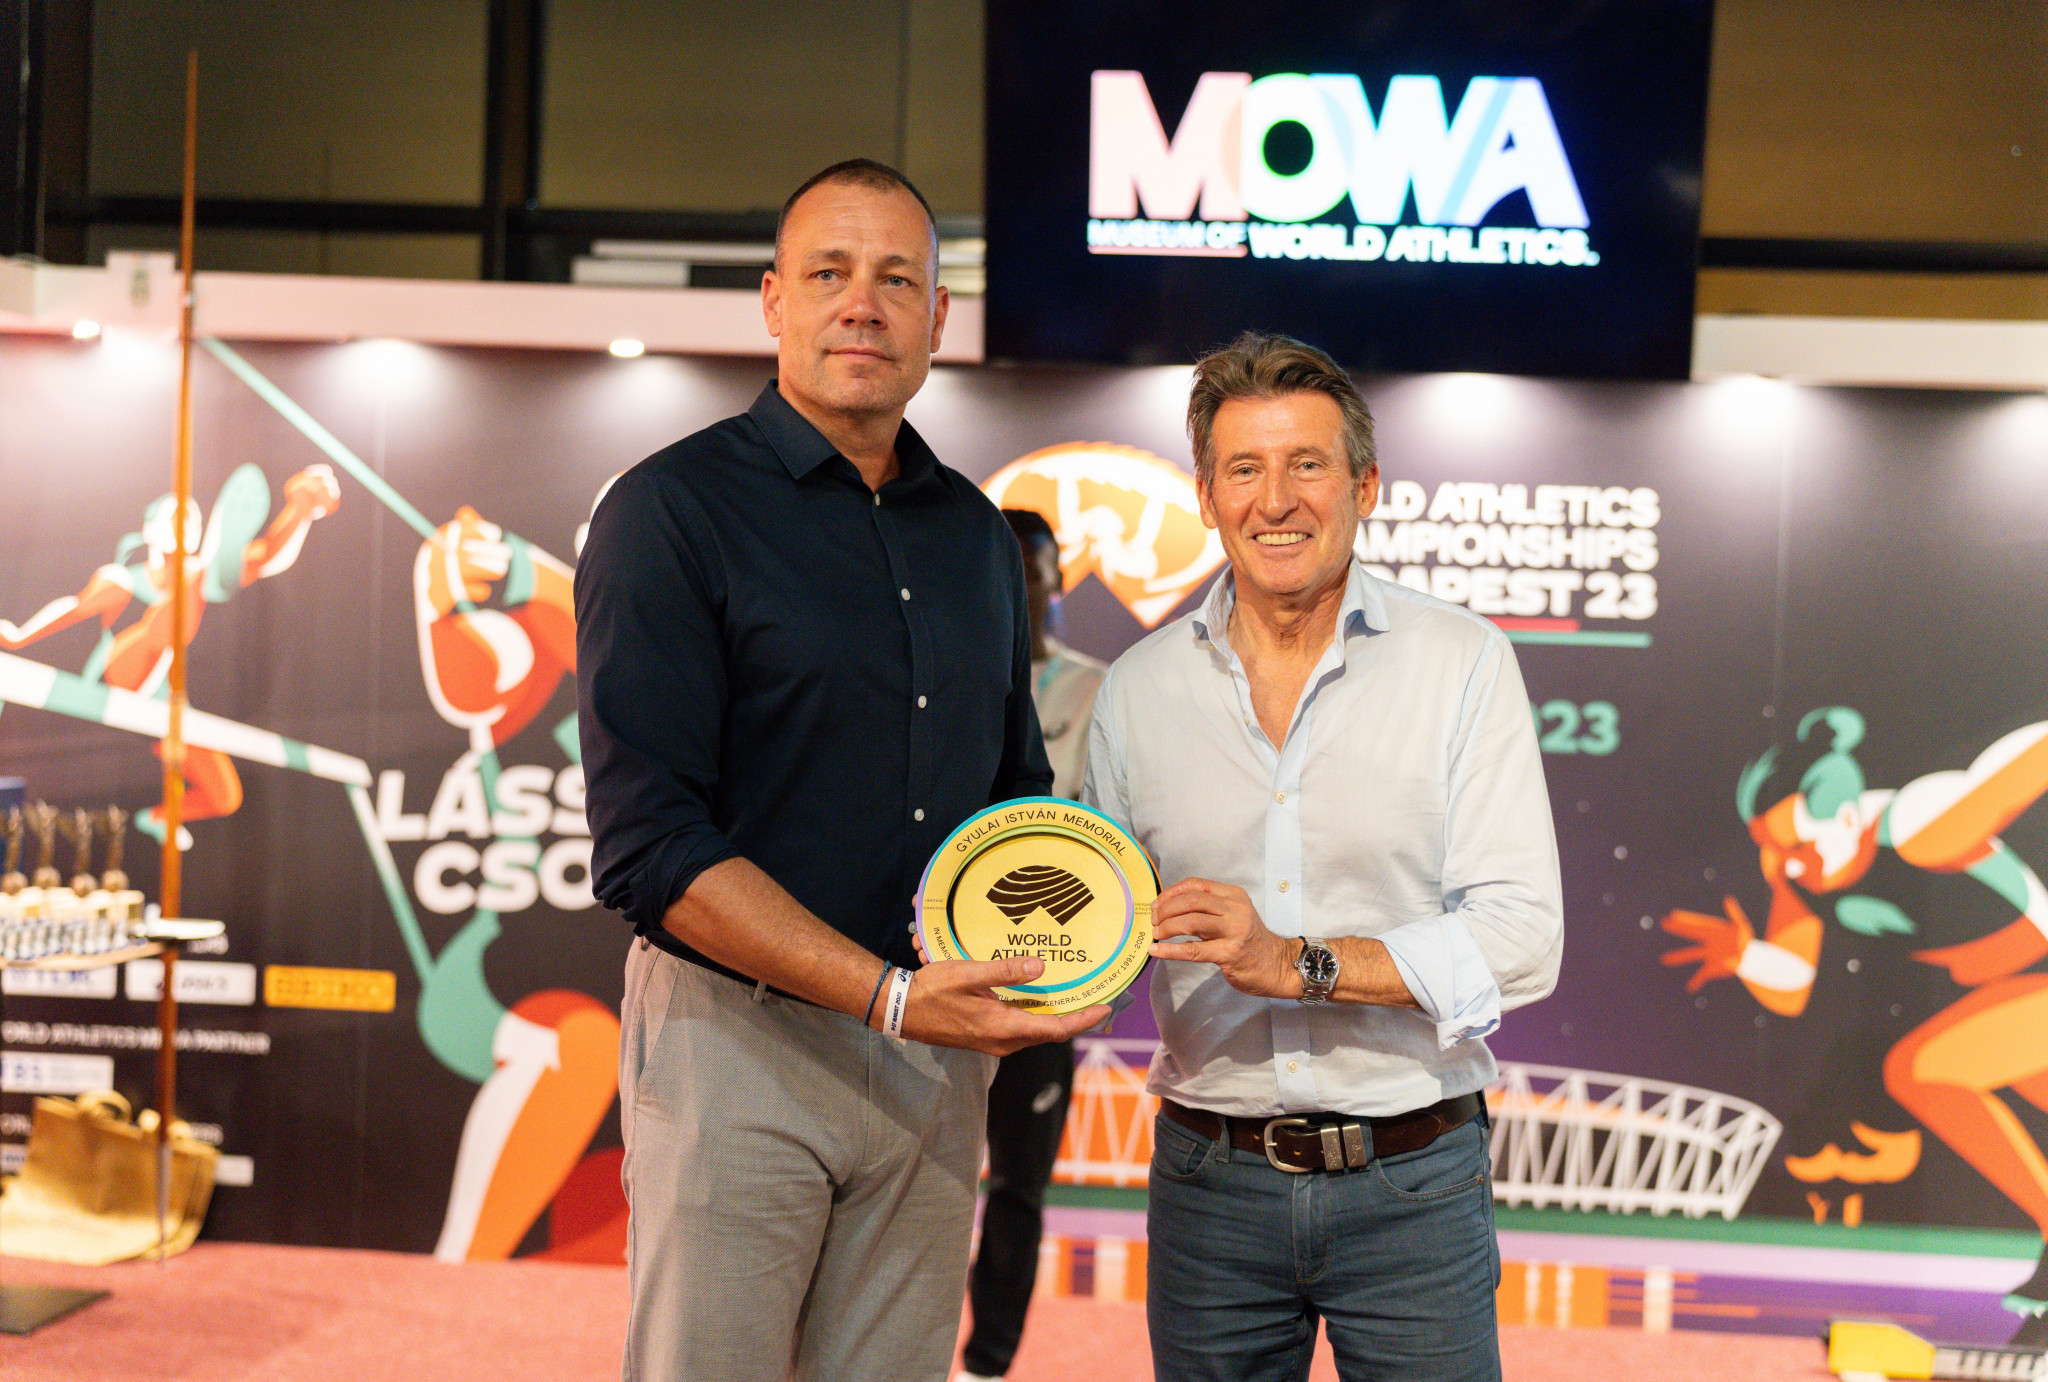 Hungarian Athletics Association President Miklos Gyulai, left, received the World Athletics heritage plaque ©MOWA